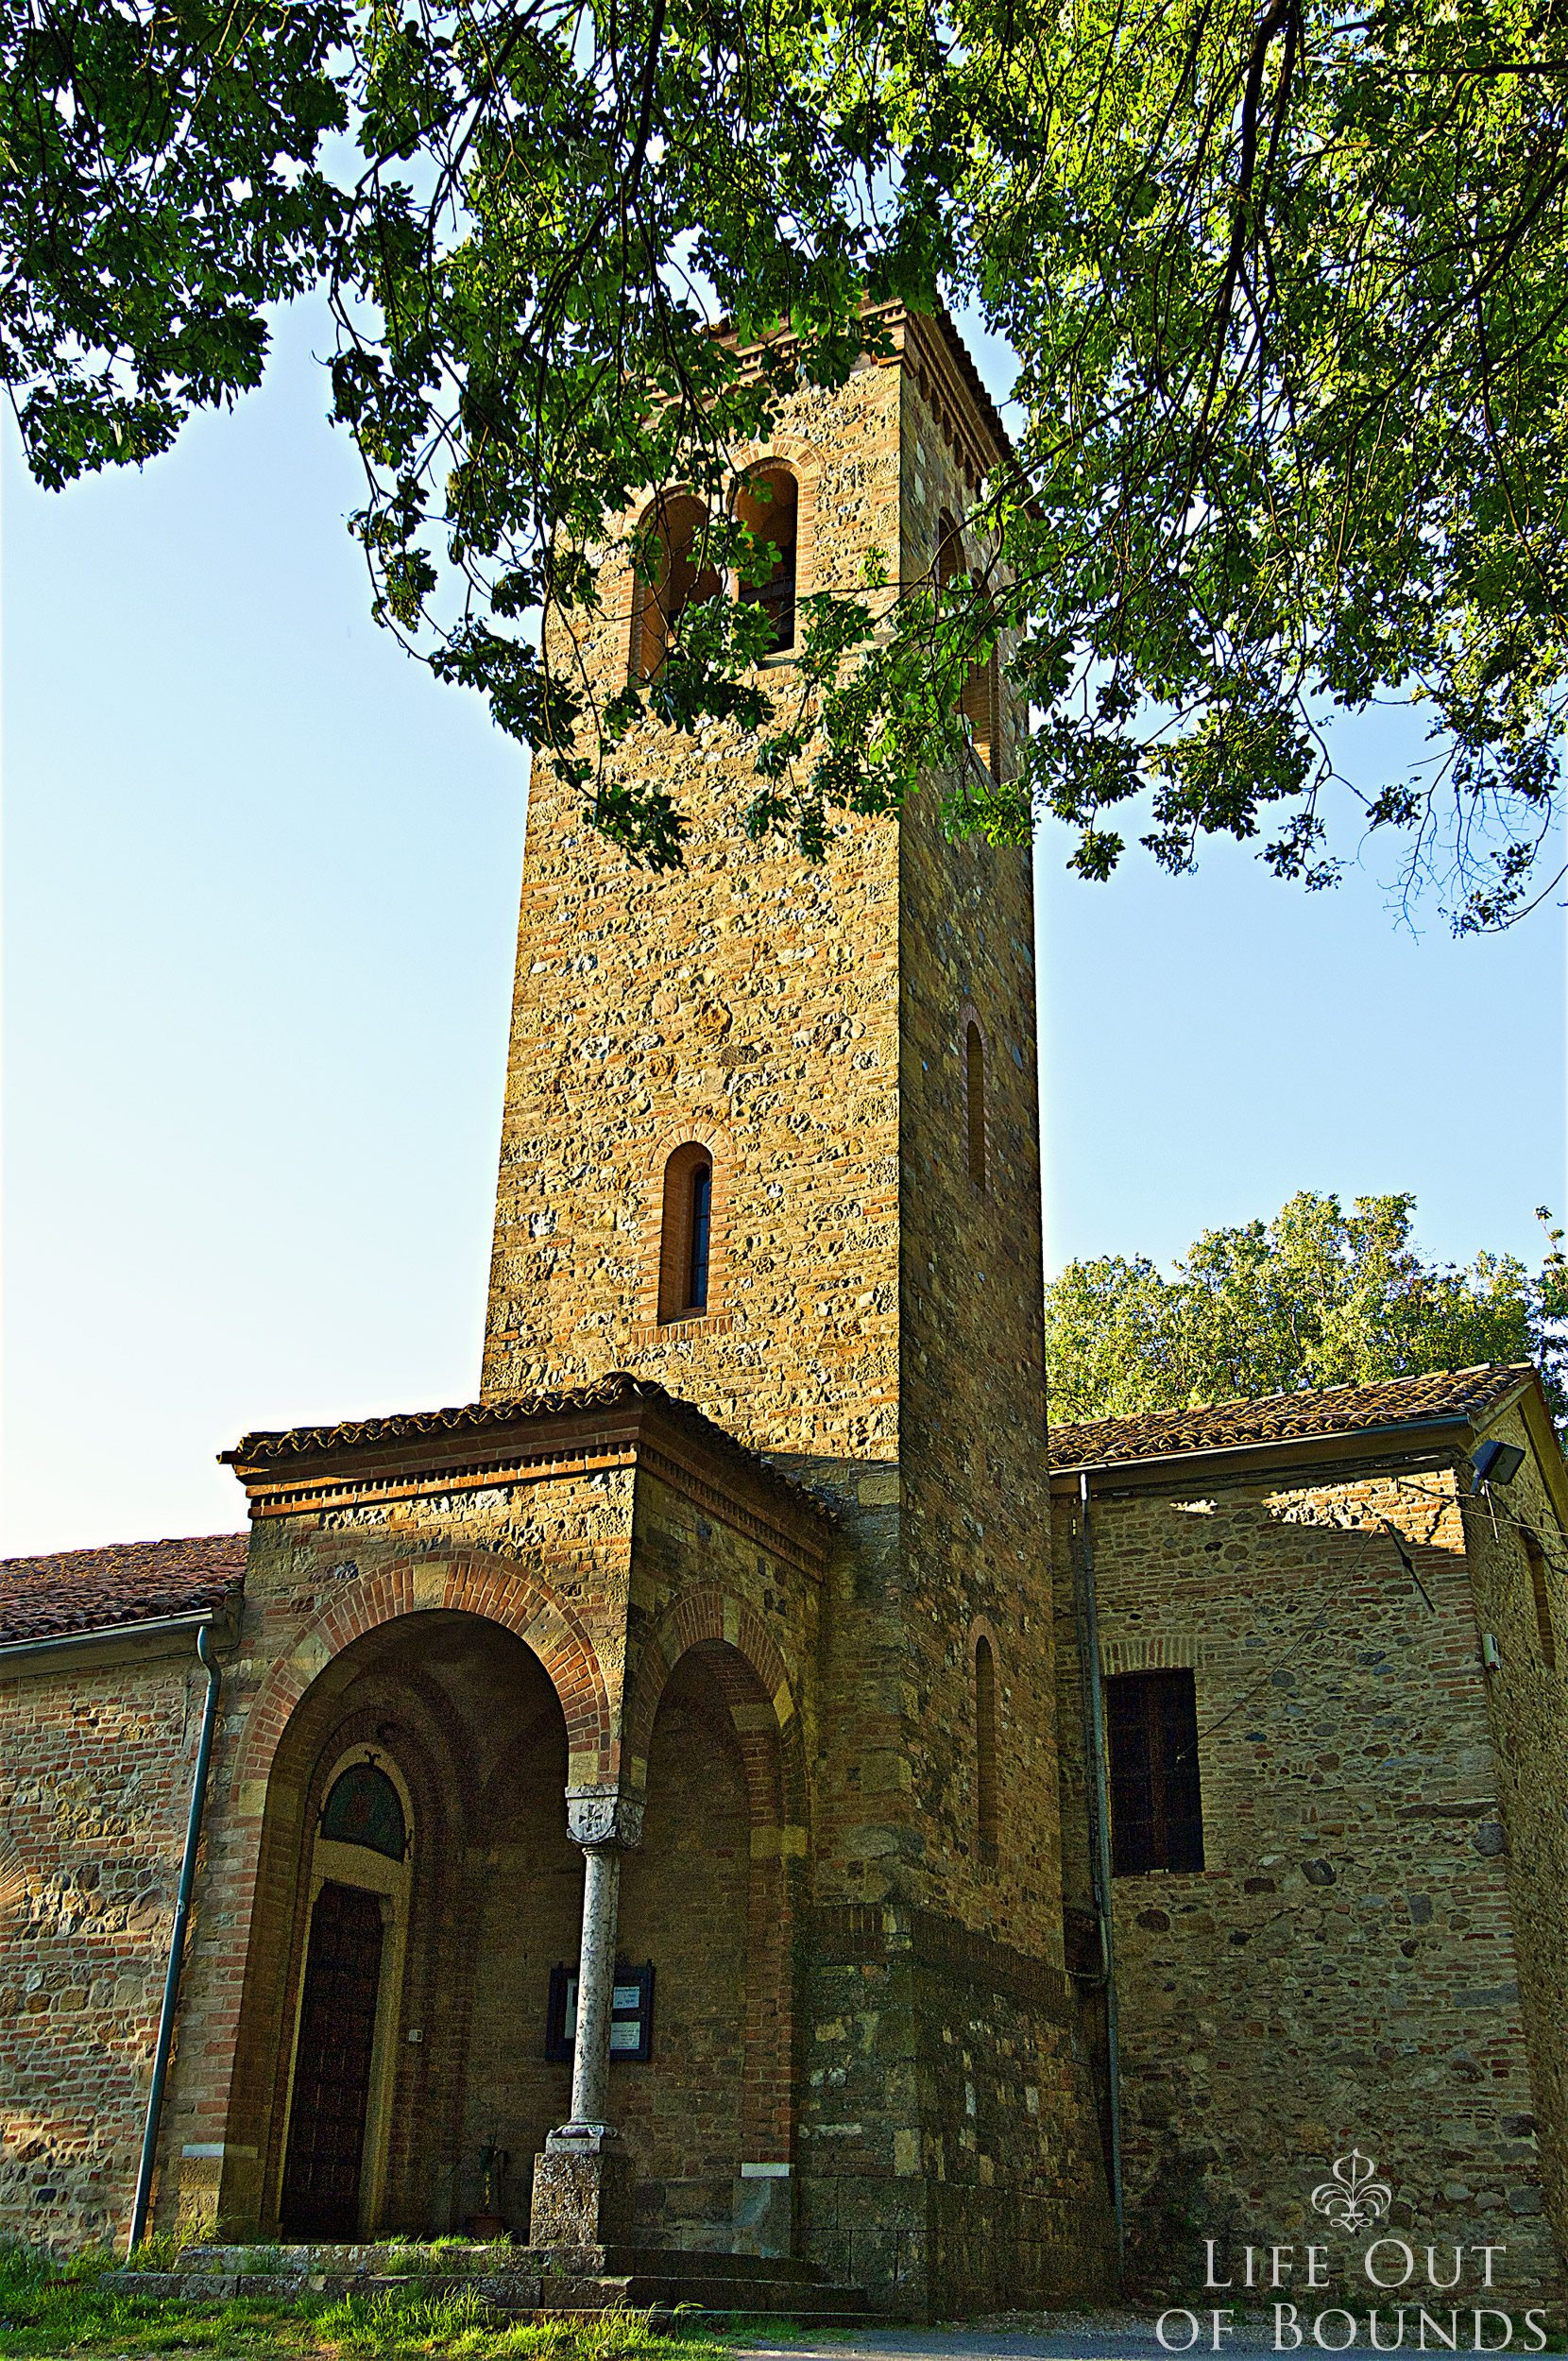 Medieval-church-of-San-Gervasio-and-Protasio-in-Tabiano-Castello-near-Parma-Italy